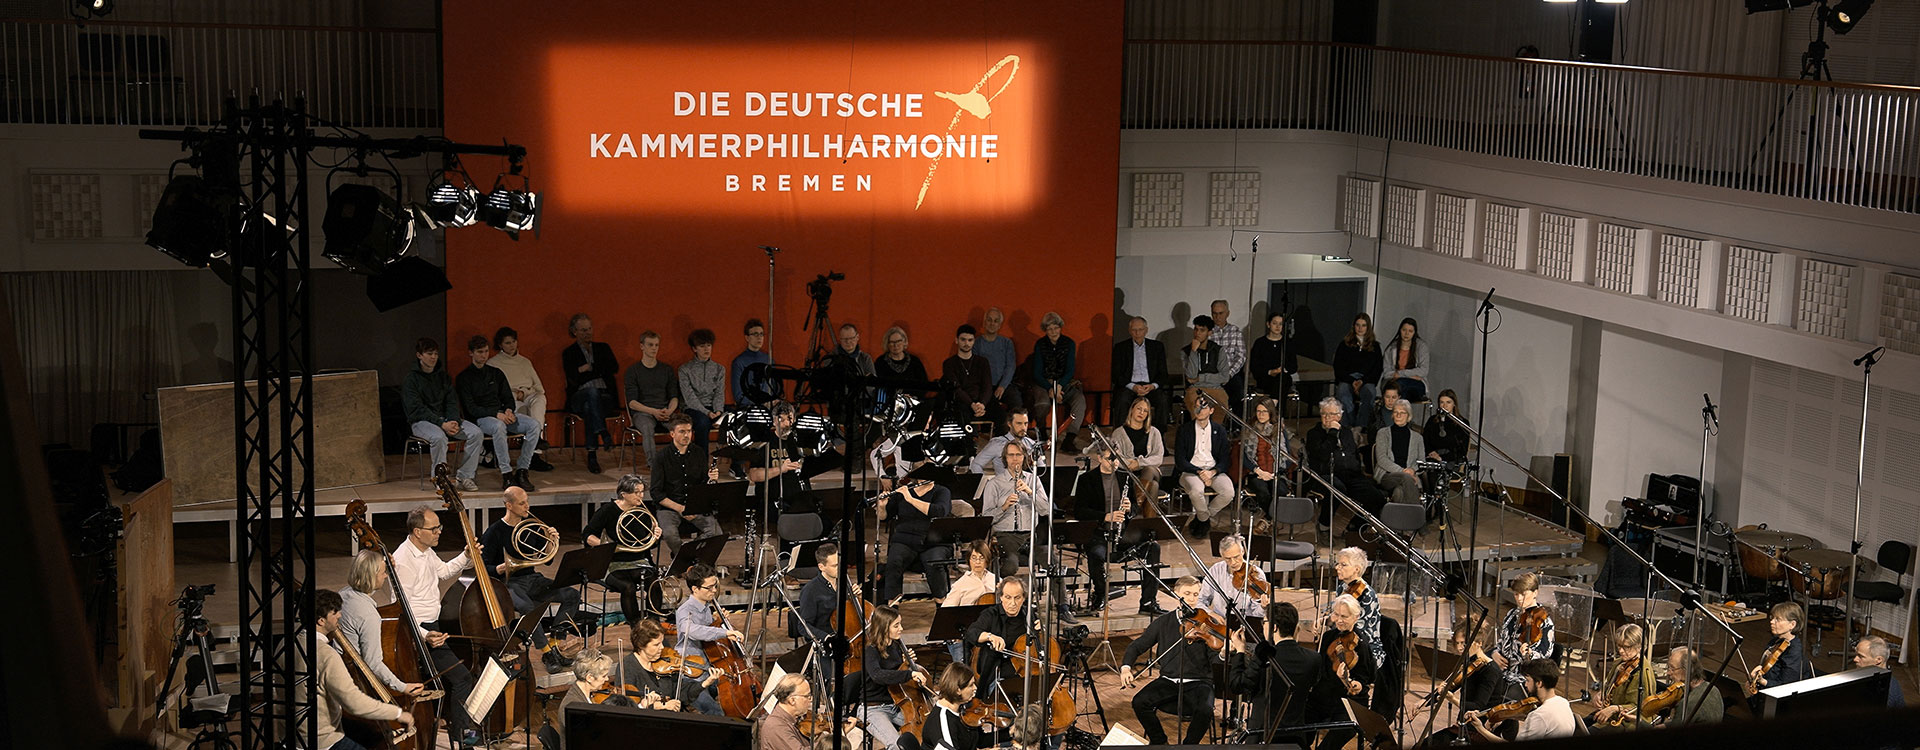 Let’s Record! - Tarmo Peltokoski & The Deutsche Kammerphilharmonie Bremen